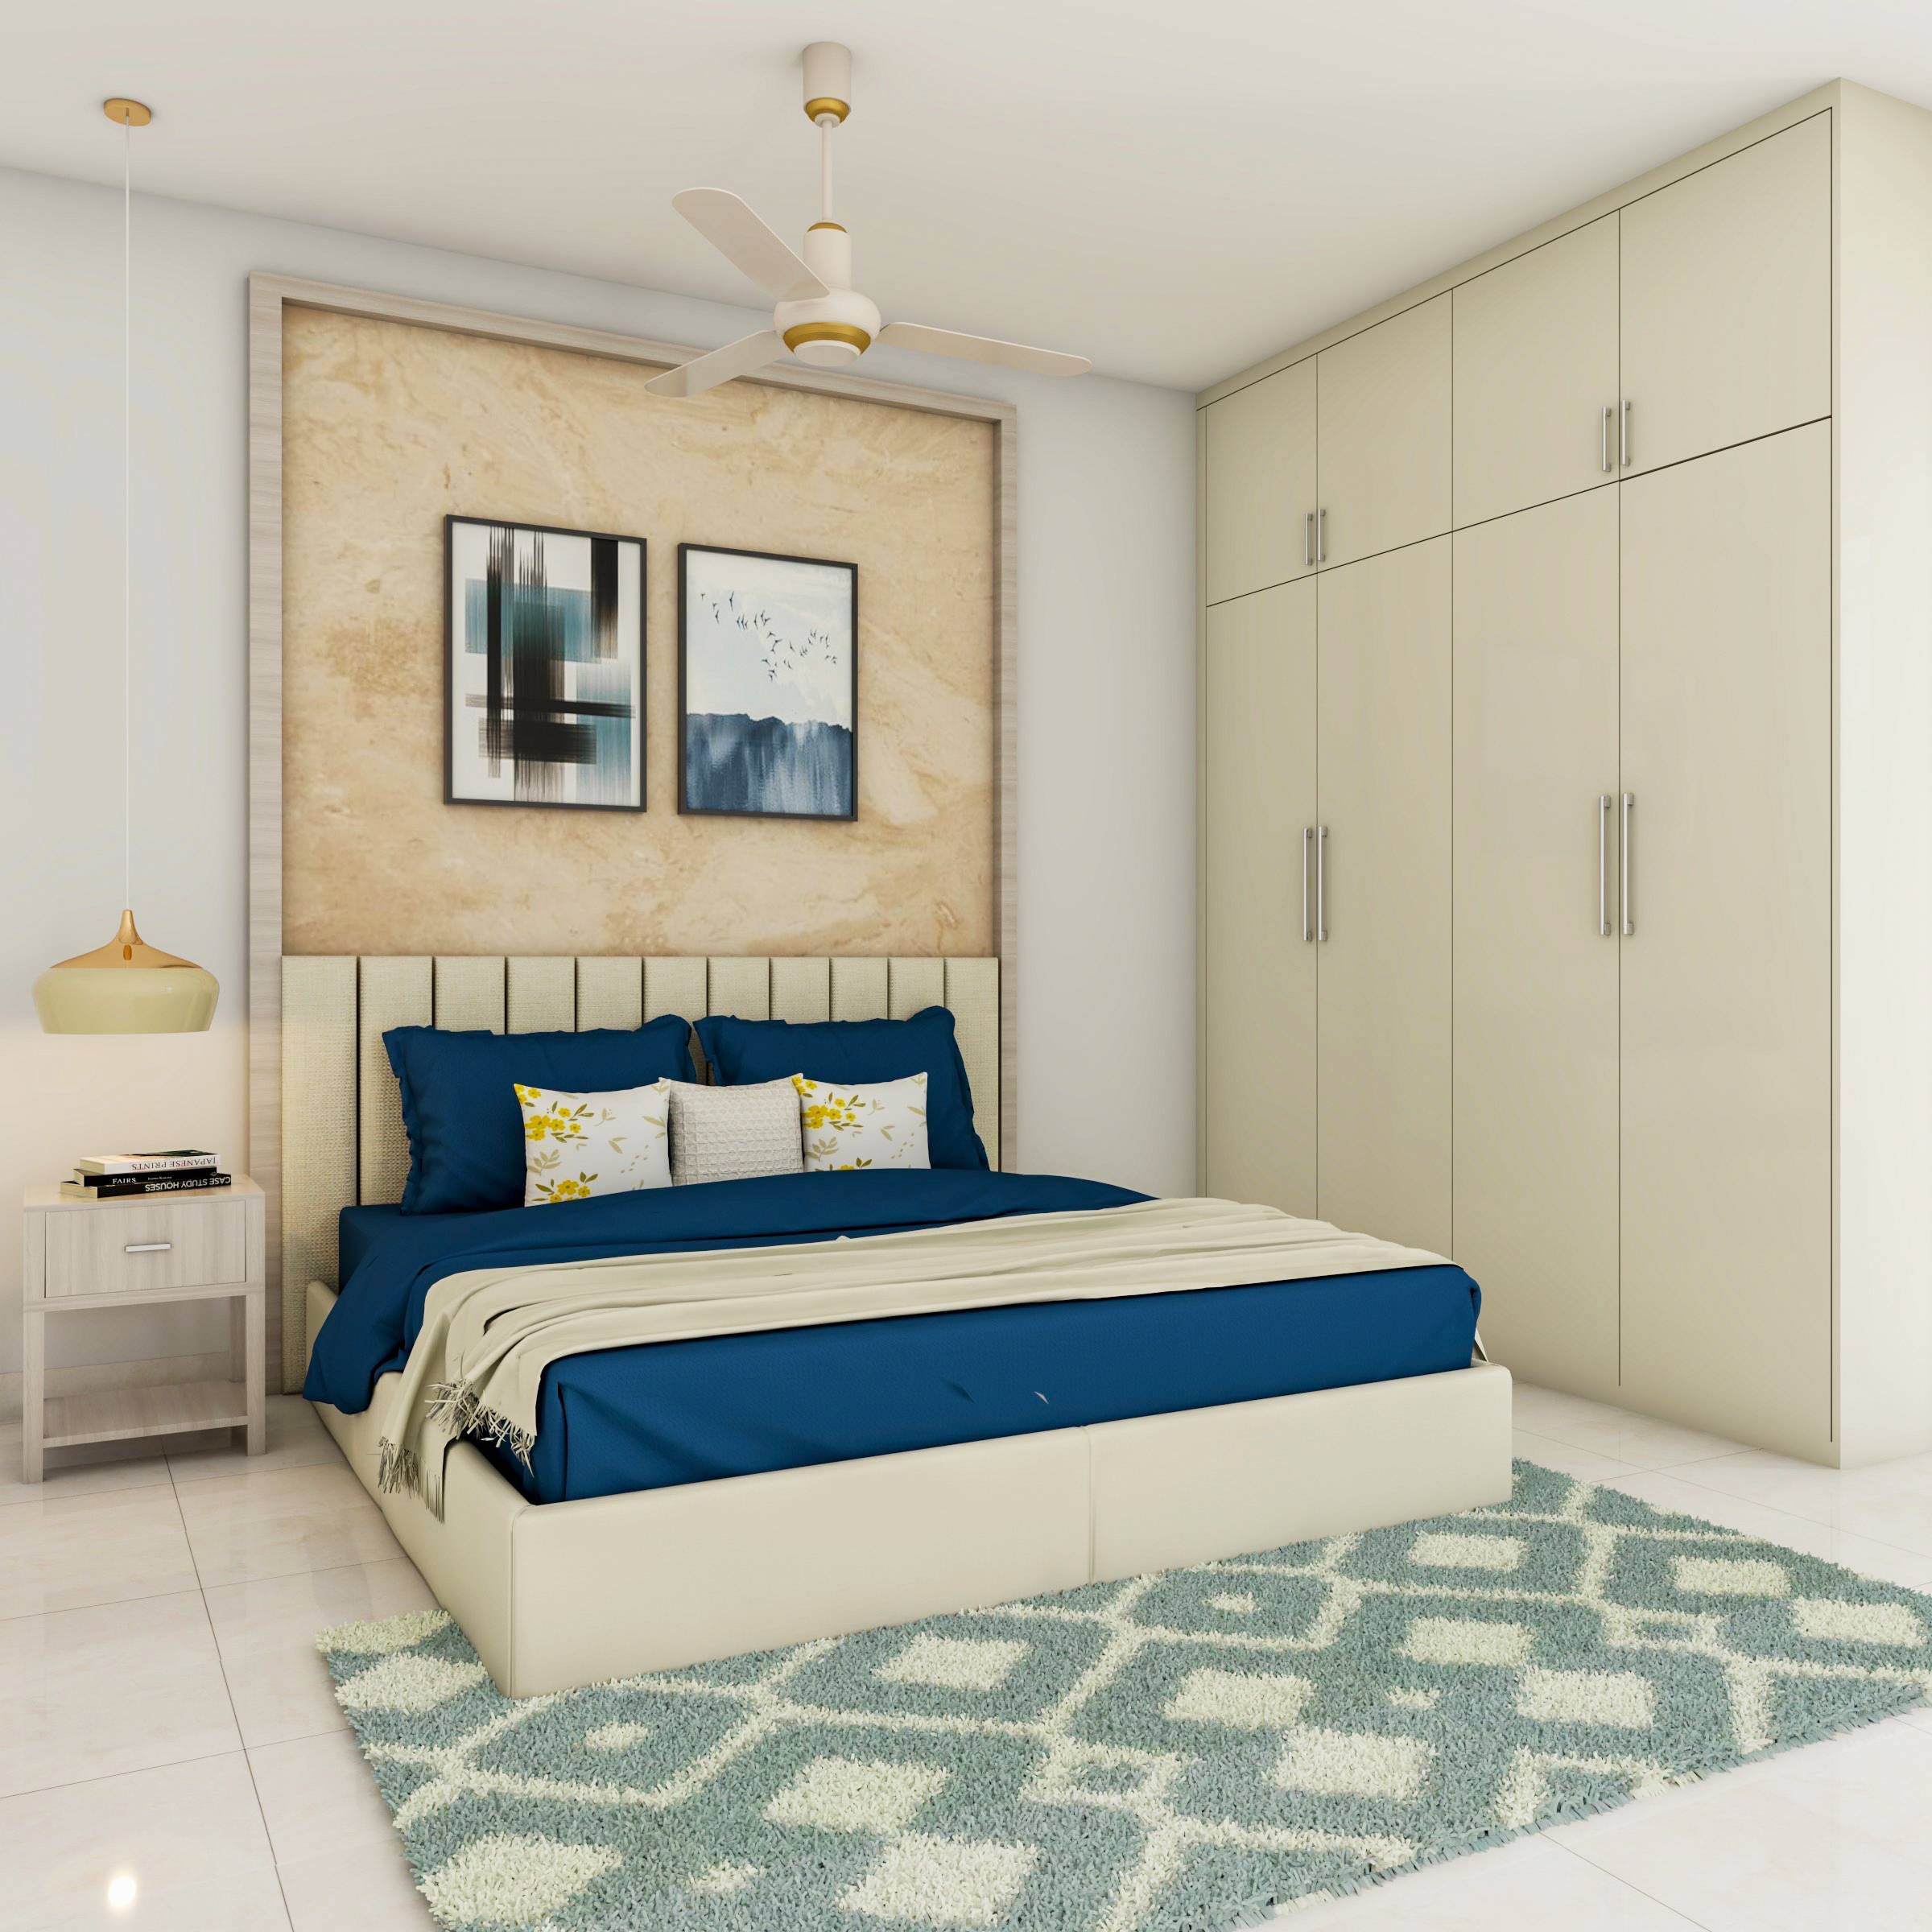 Contemporary Guest Bedroom Design With Dark Blue Bedding